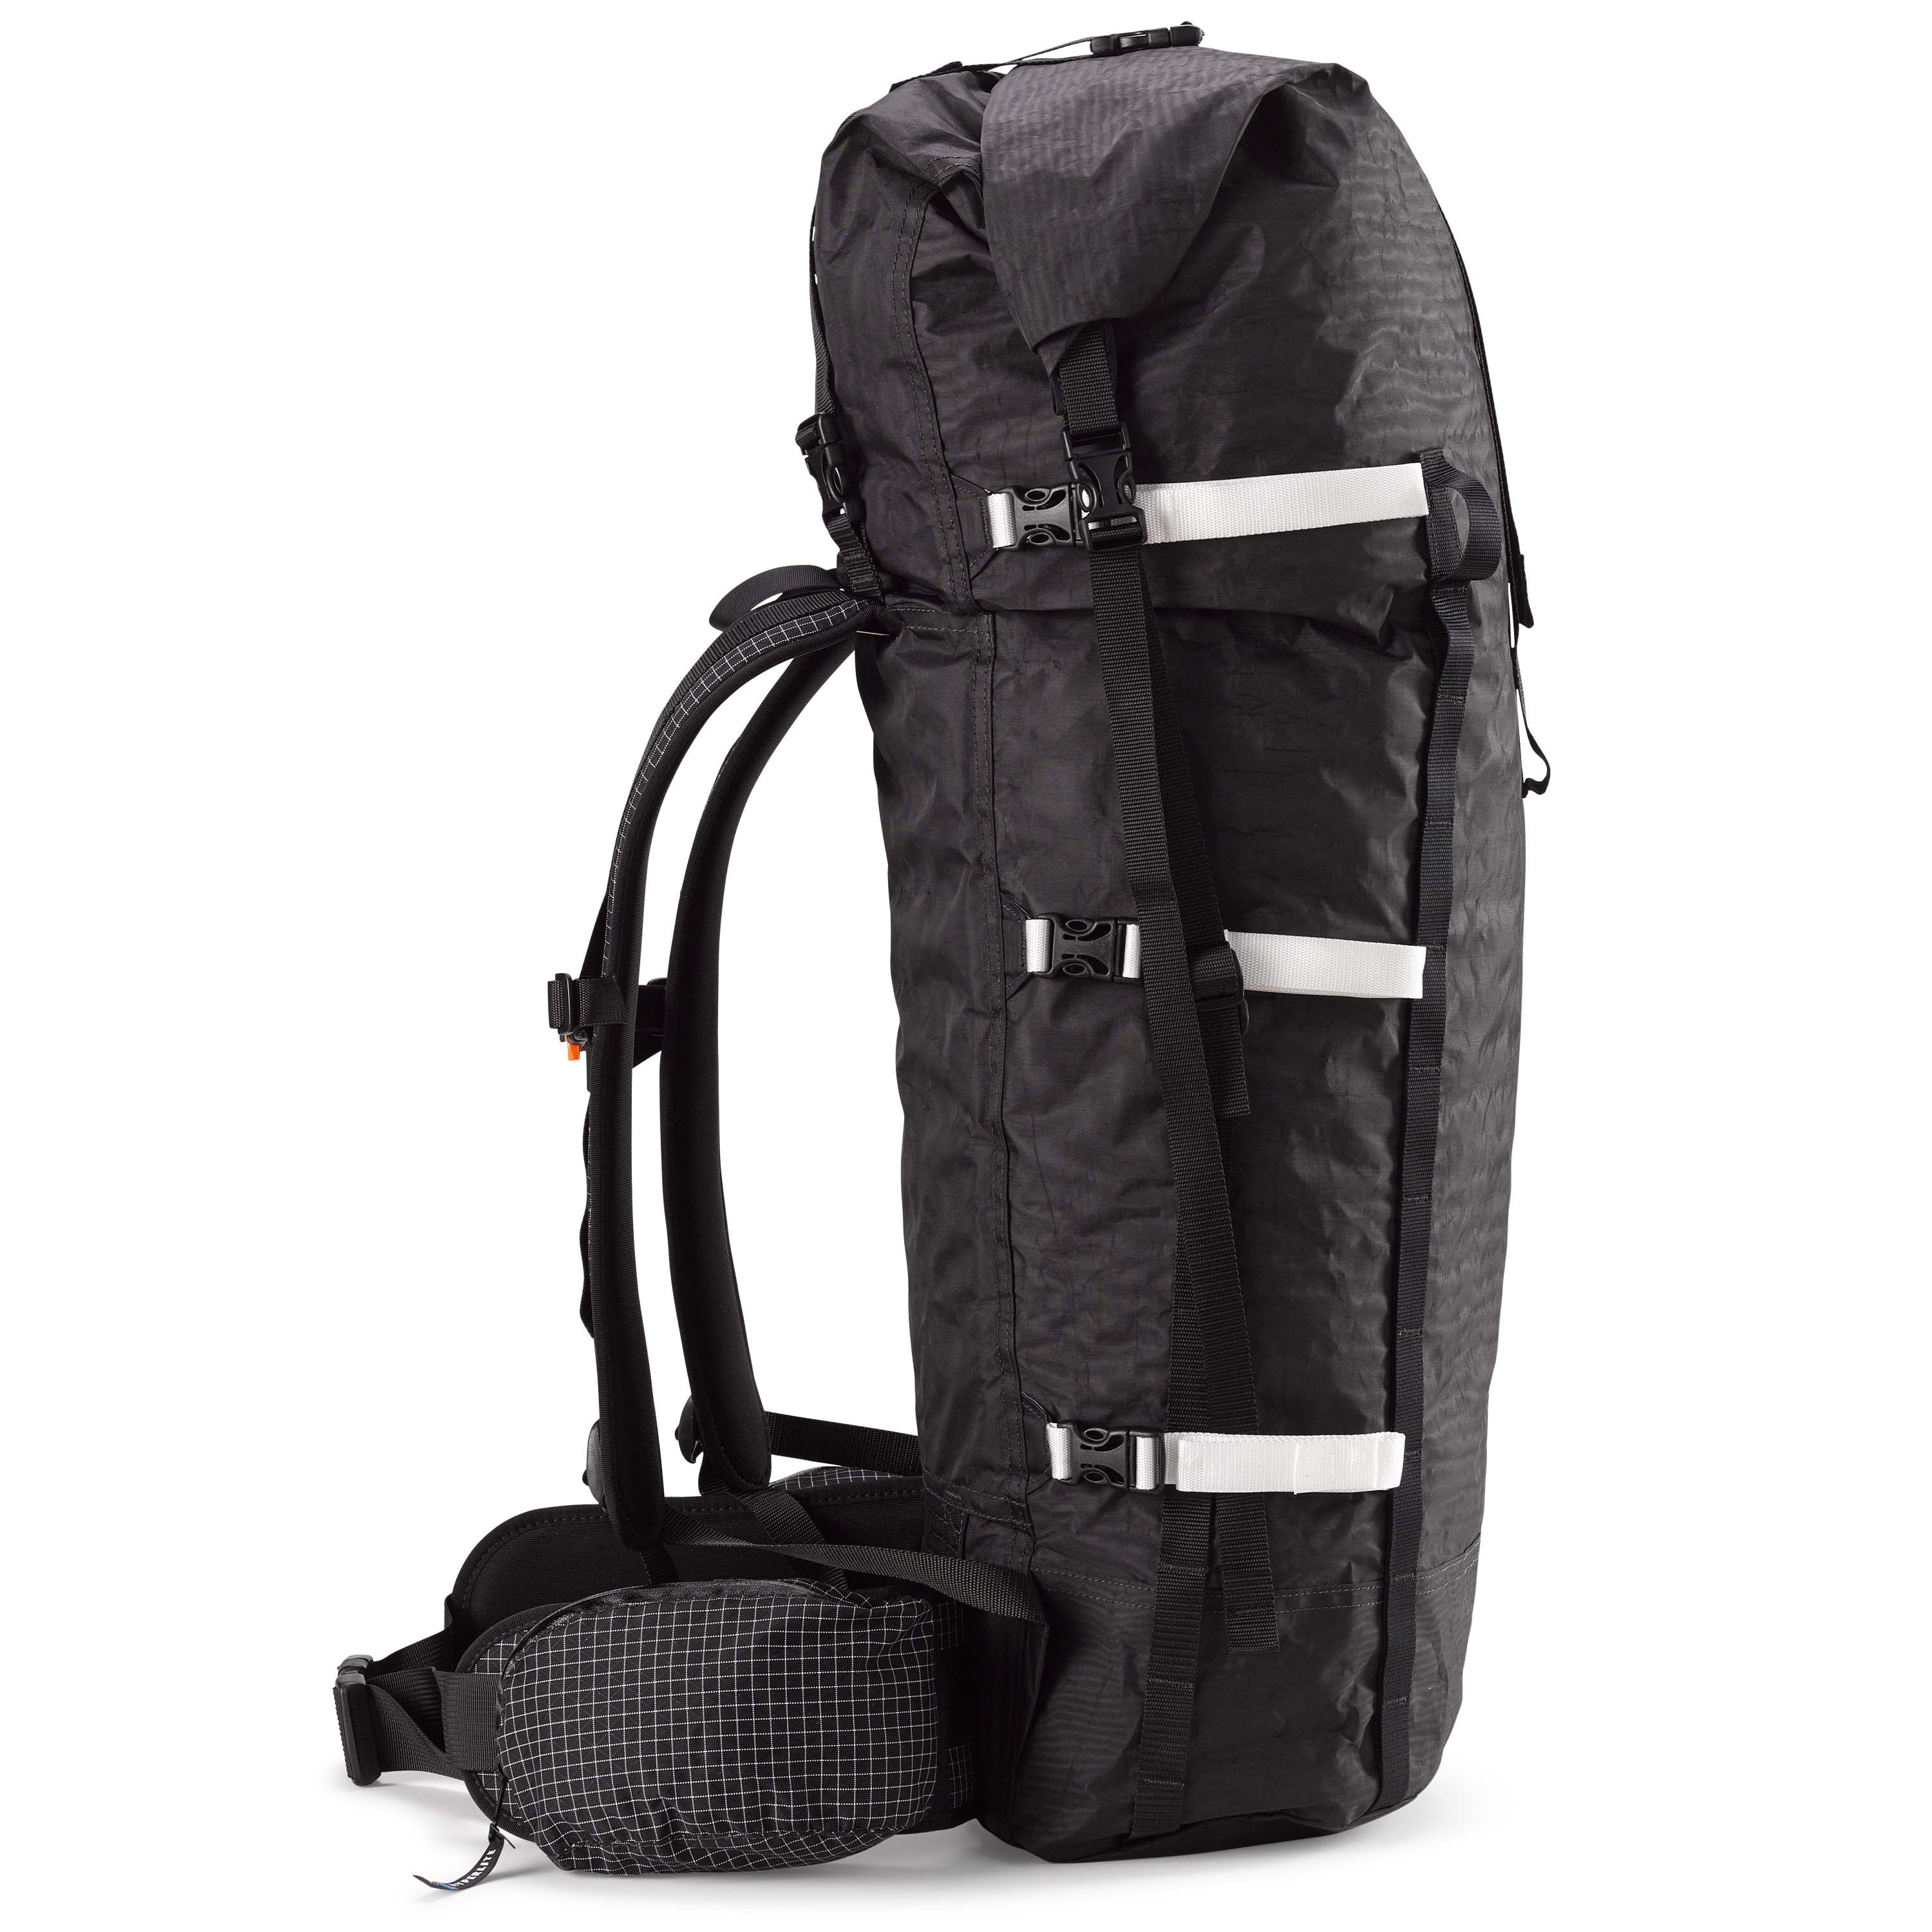 Buy hiker's way 60 Litres Internal Frame Rucksack bags backpacks Travel Bag  Hiking Bag Camping Bag Trekking bags with waterproof compartment (Black) at  Amazon.in